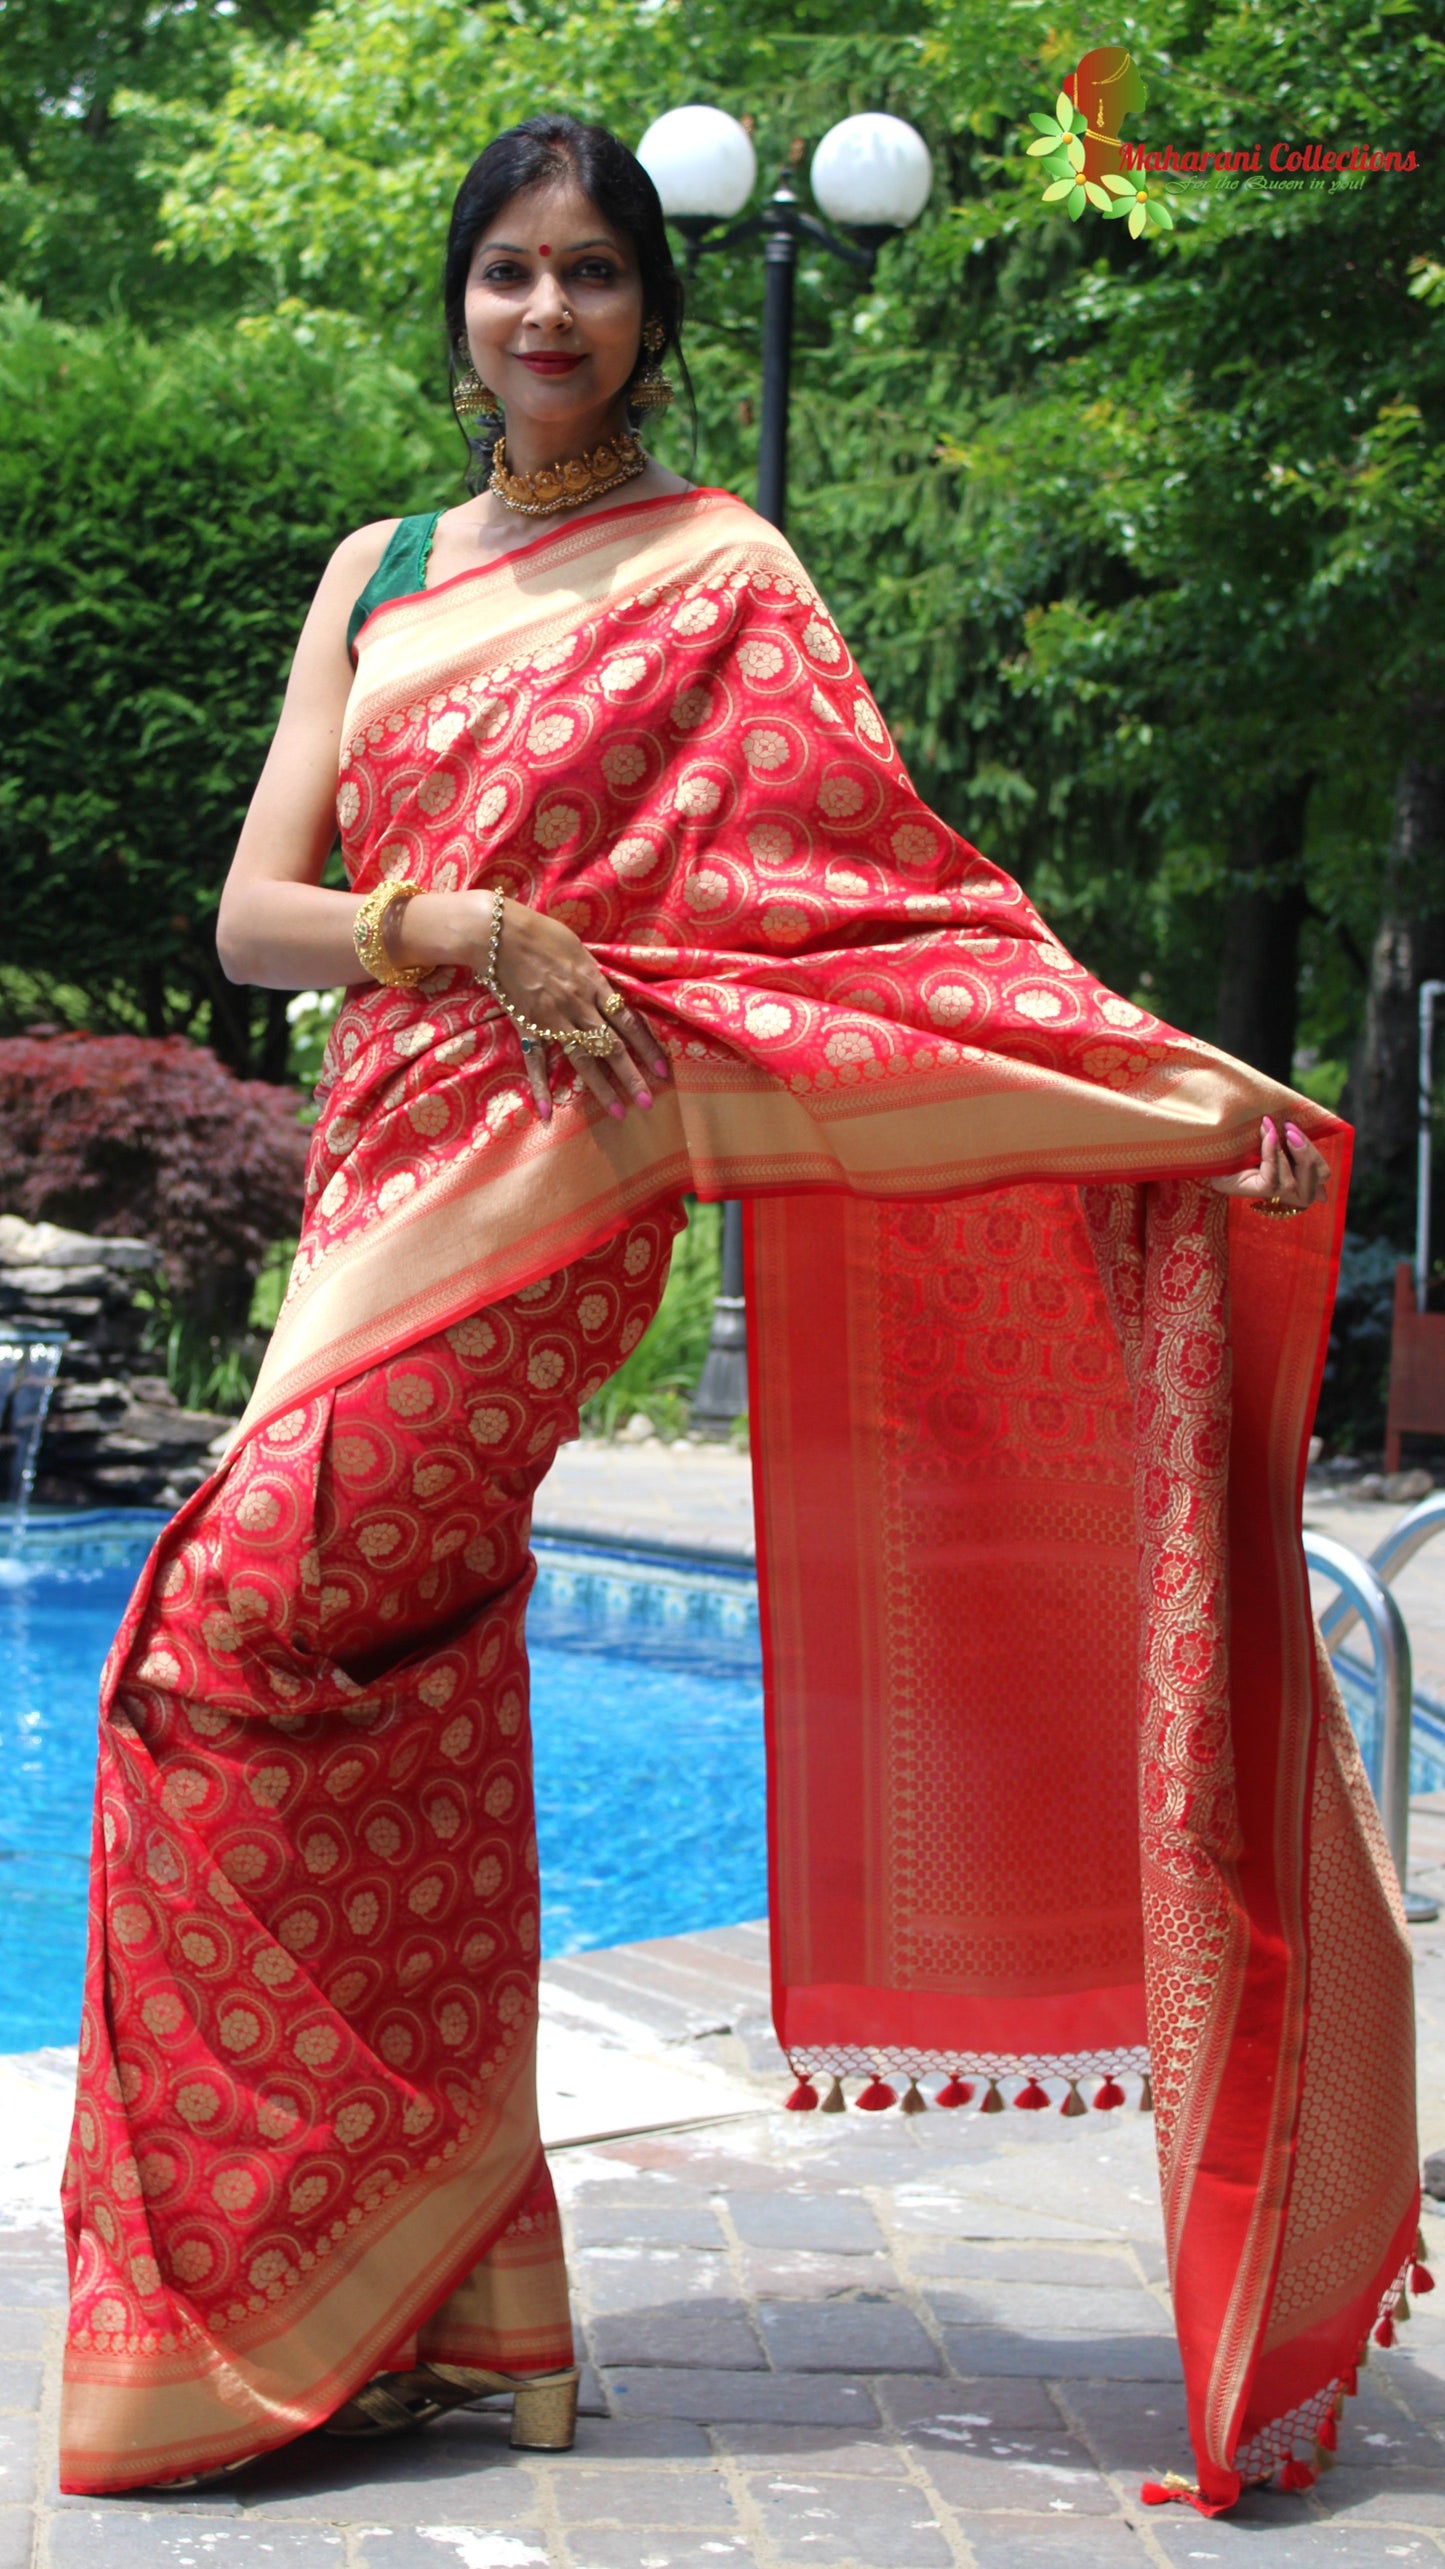 Maharani's Pure Heavy Zari Banarasi Silk Saree - Bridal Red (with Stitched Blouse and Petticoat)